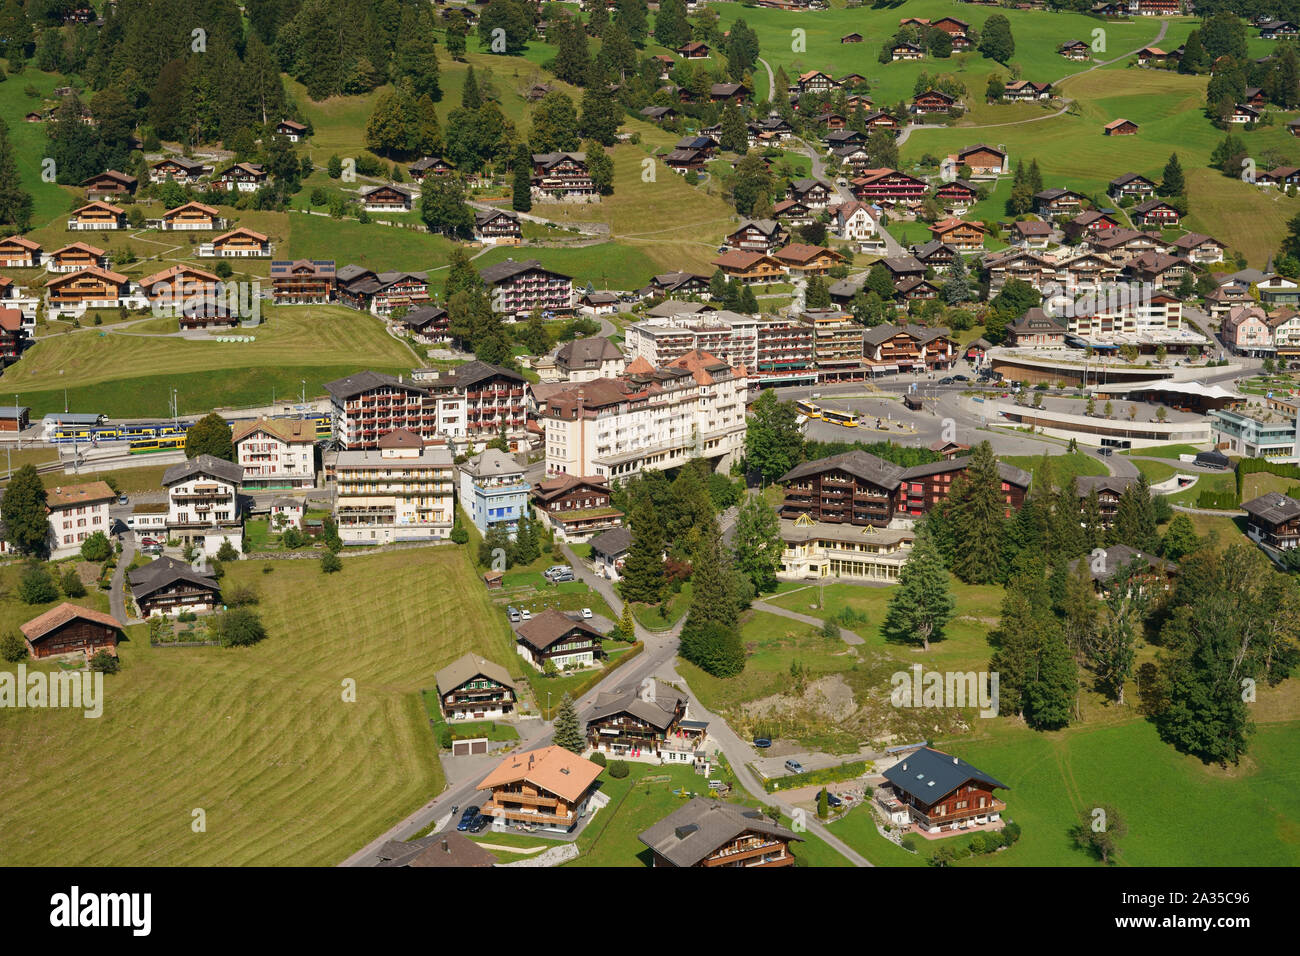 GRINDELWALD, Kanton Bern, Schweiz - 16. SEPTEMBER 2019: Luftaufnahme von Grindelwald im Kanton Bern, Schweiz. Stockfoto